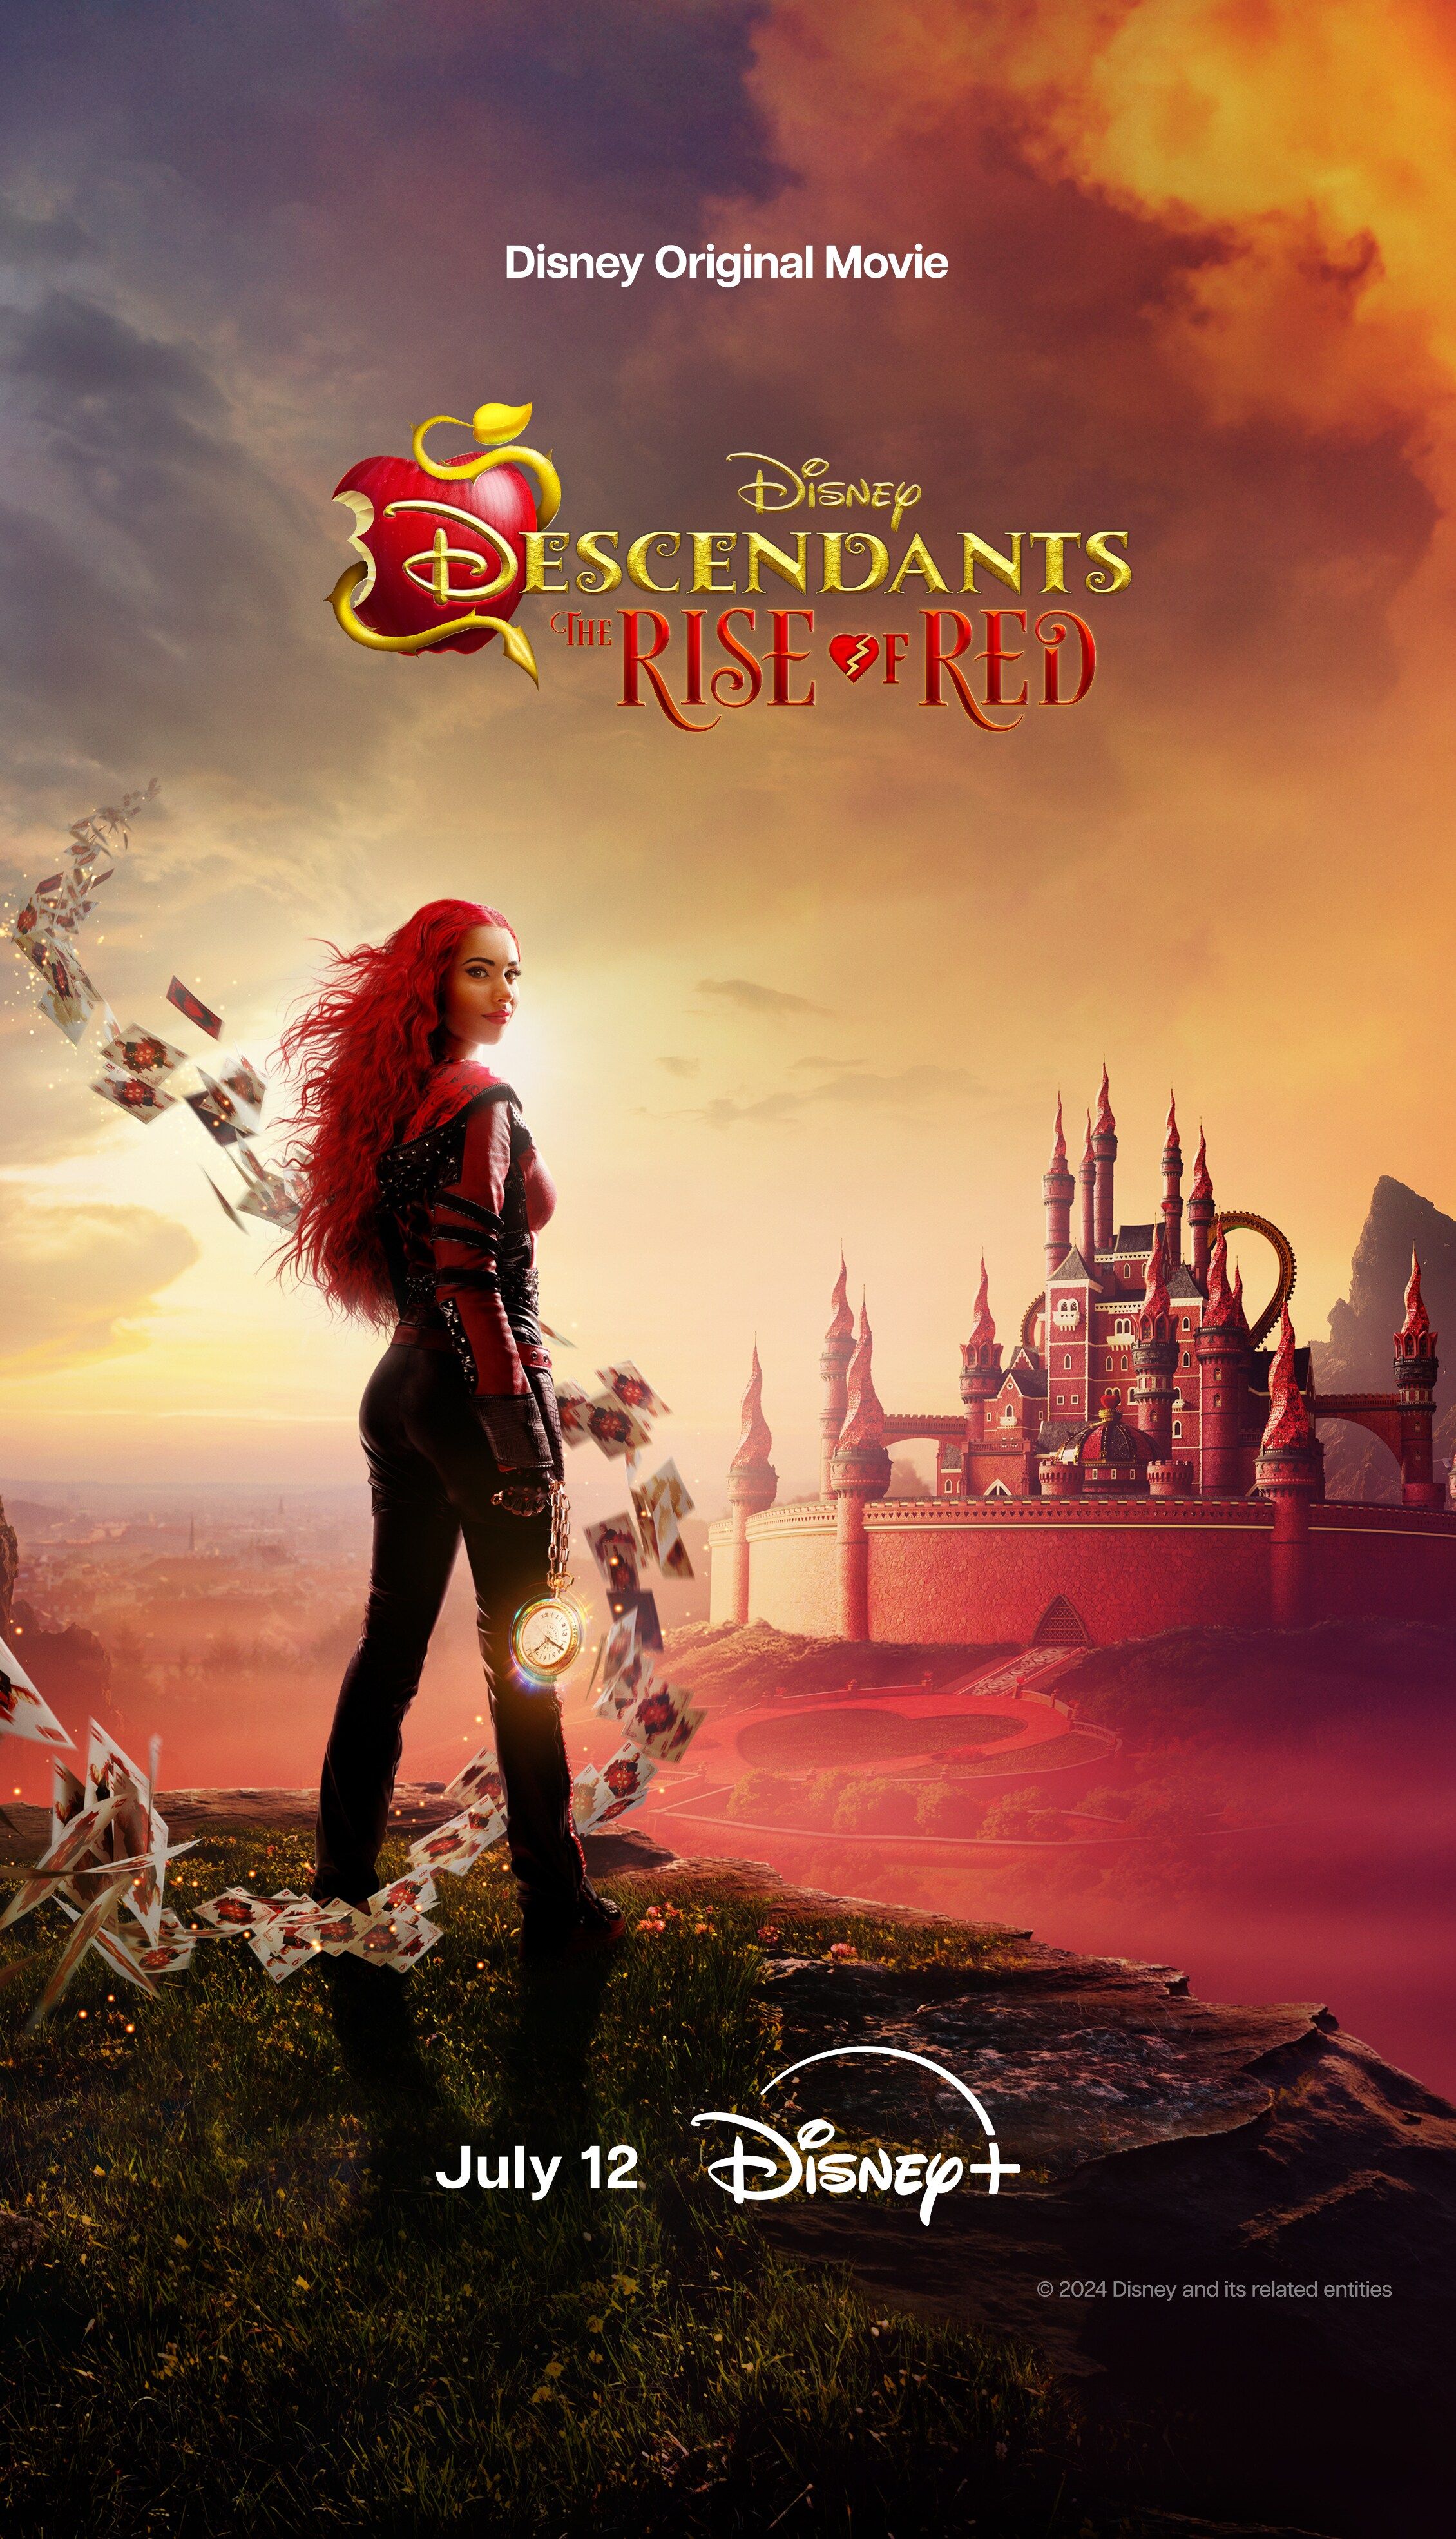 Plakat Descendants The Rise of Red Disney Plus